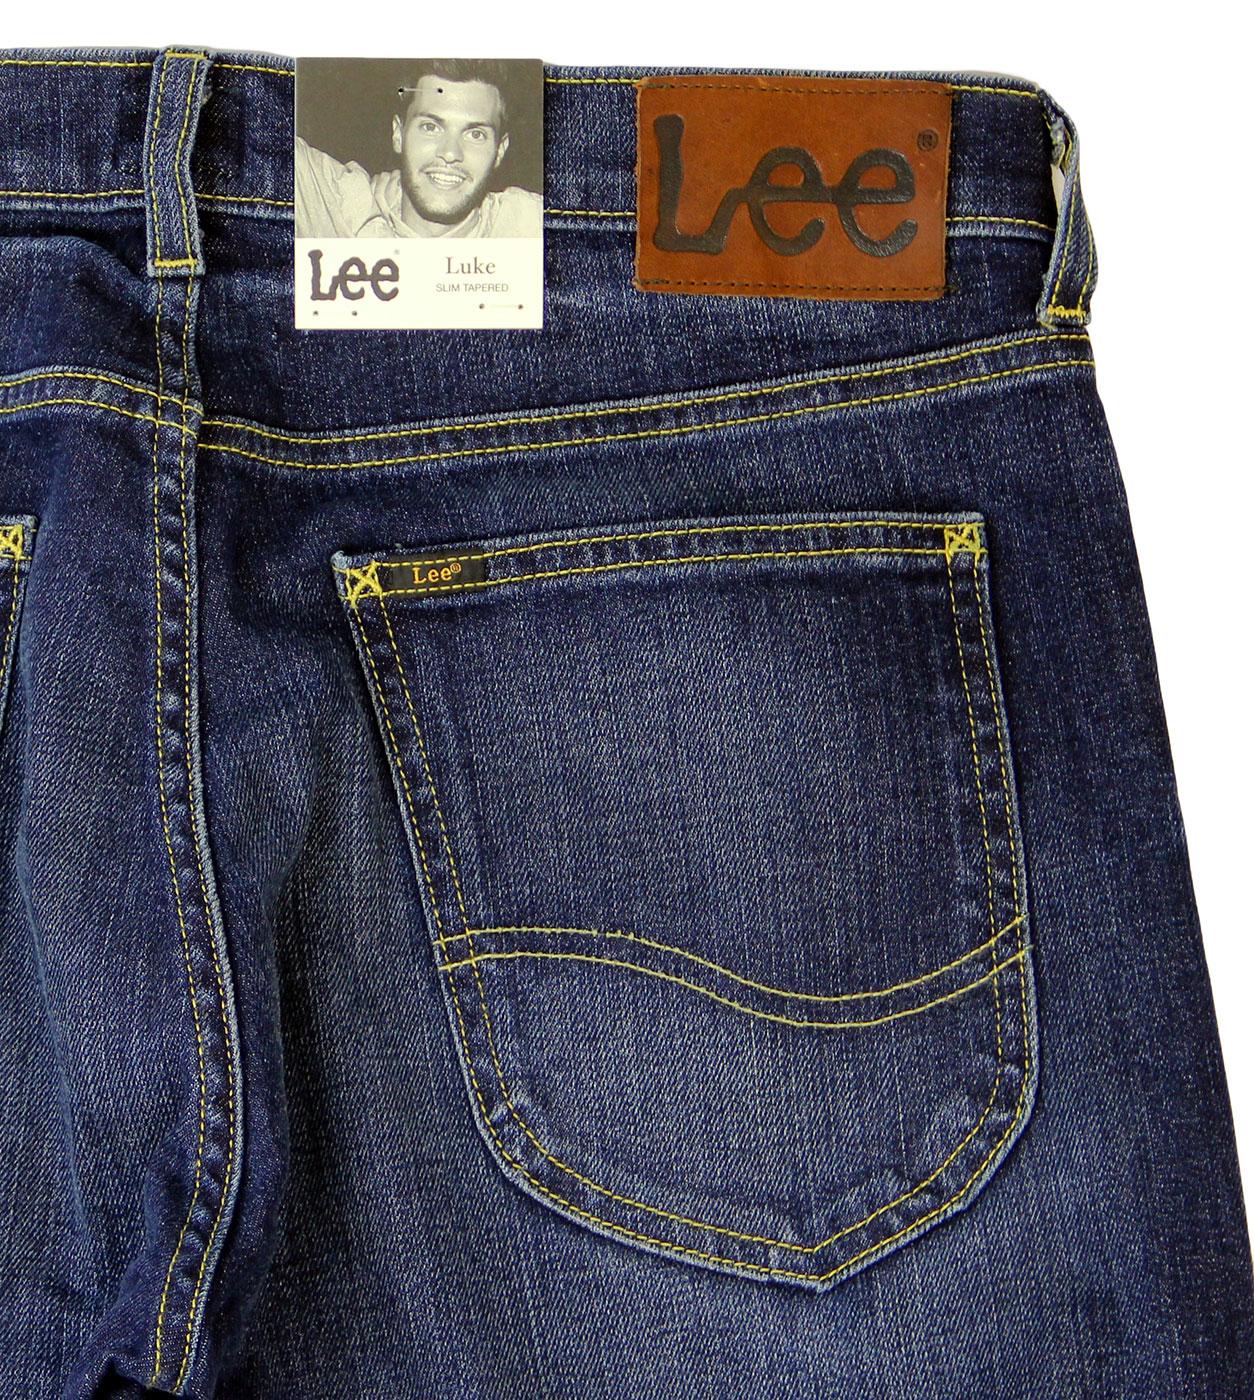 LEE JEANS Luke Retro Indie Mod Slim Tapered Fit Jeans Night Sky